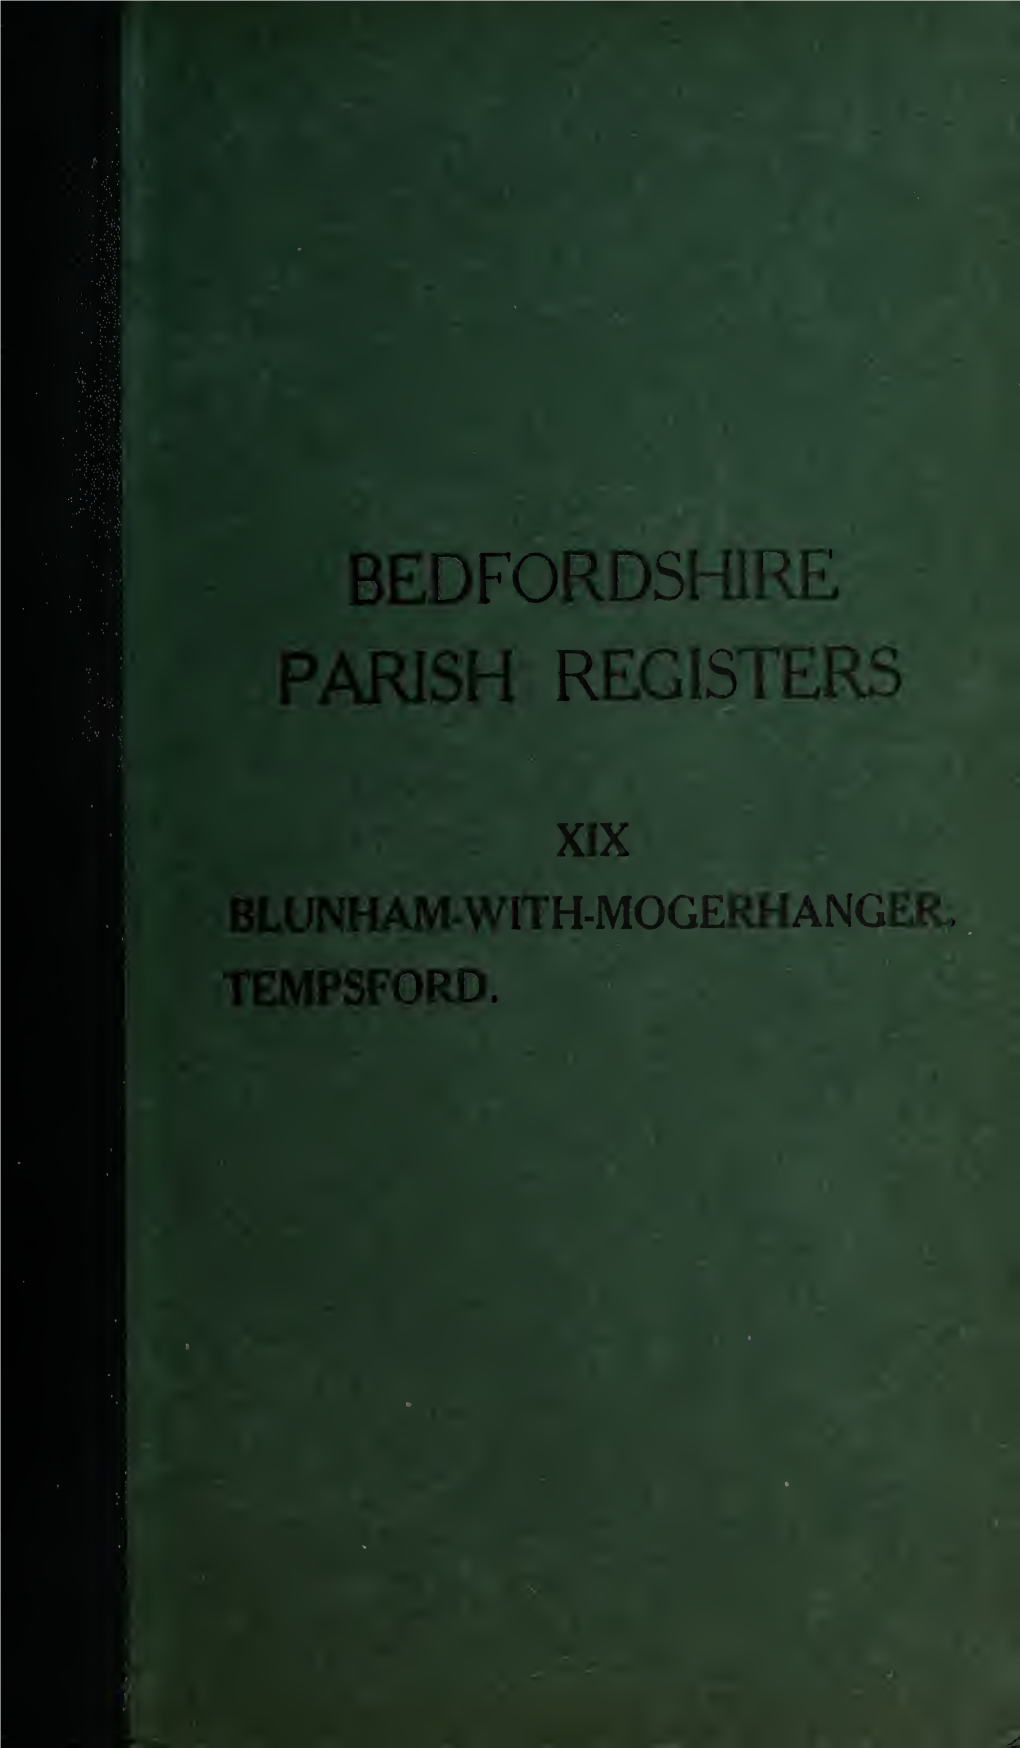 Bedfordshire Parish Registers